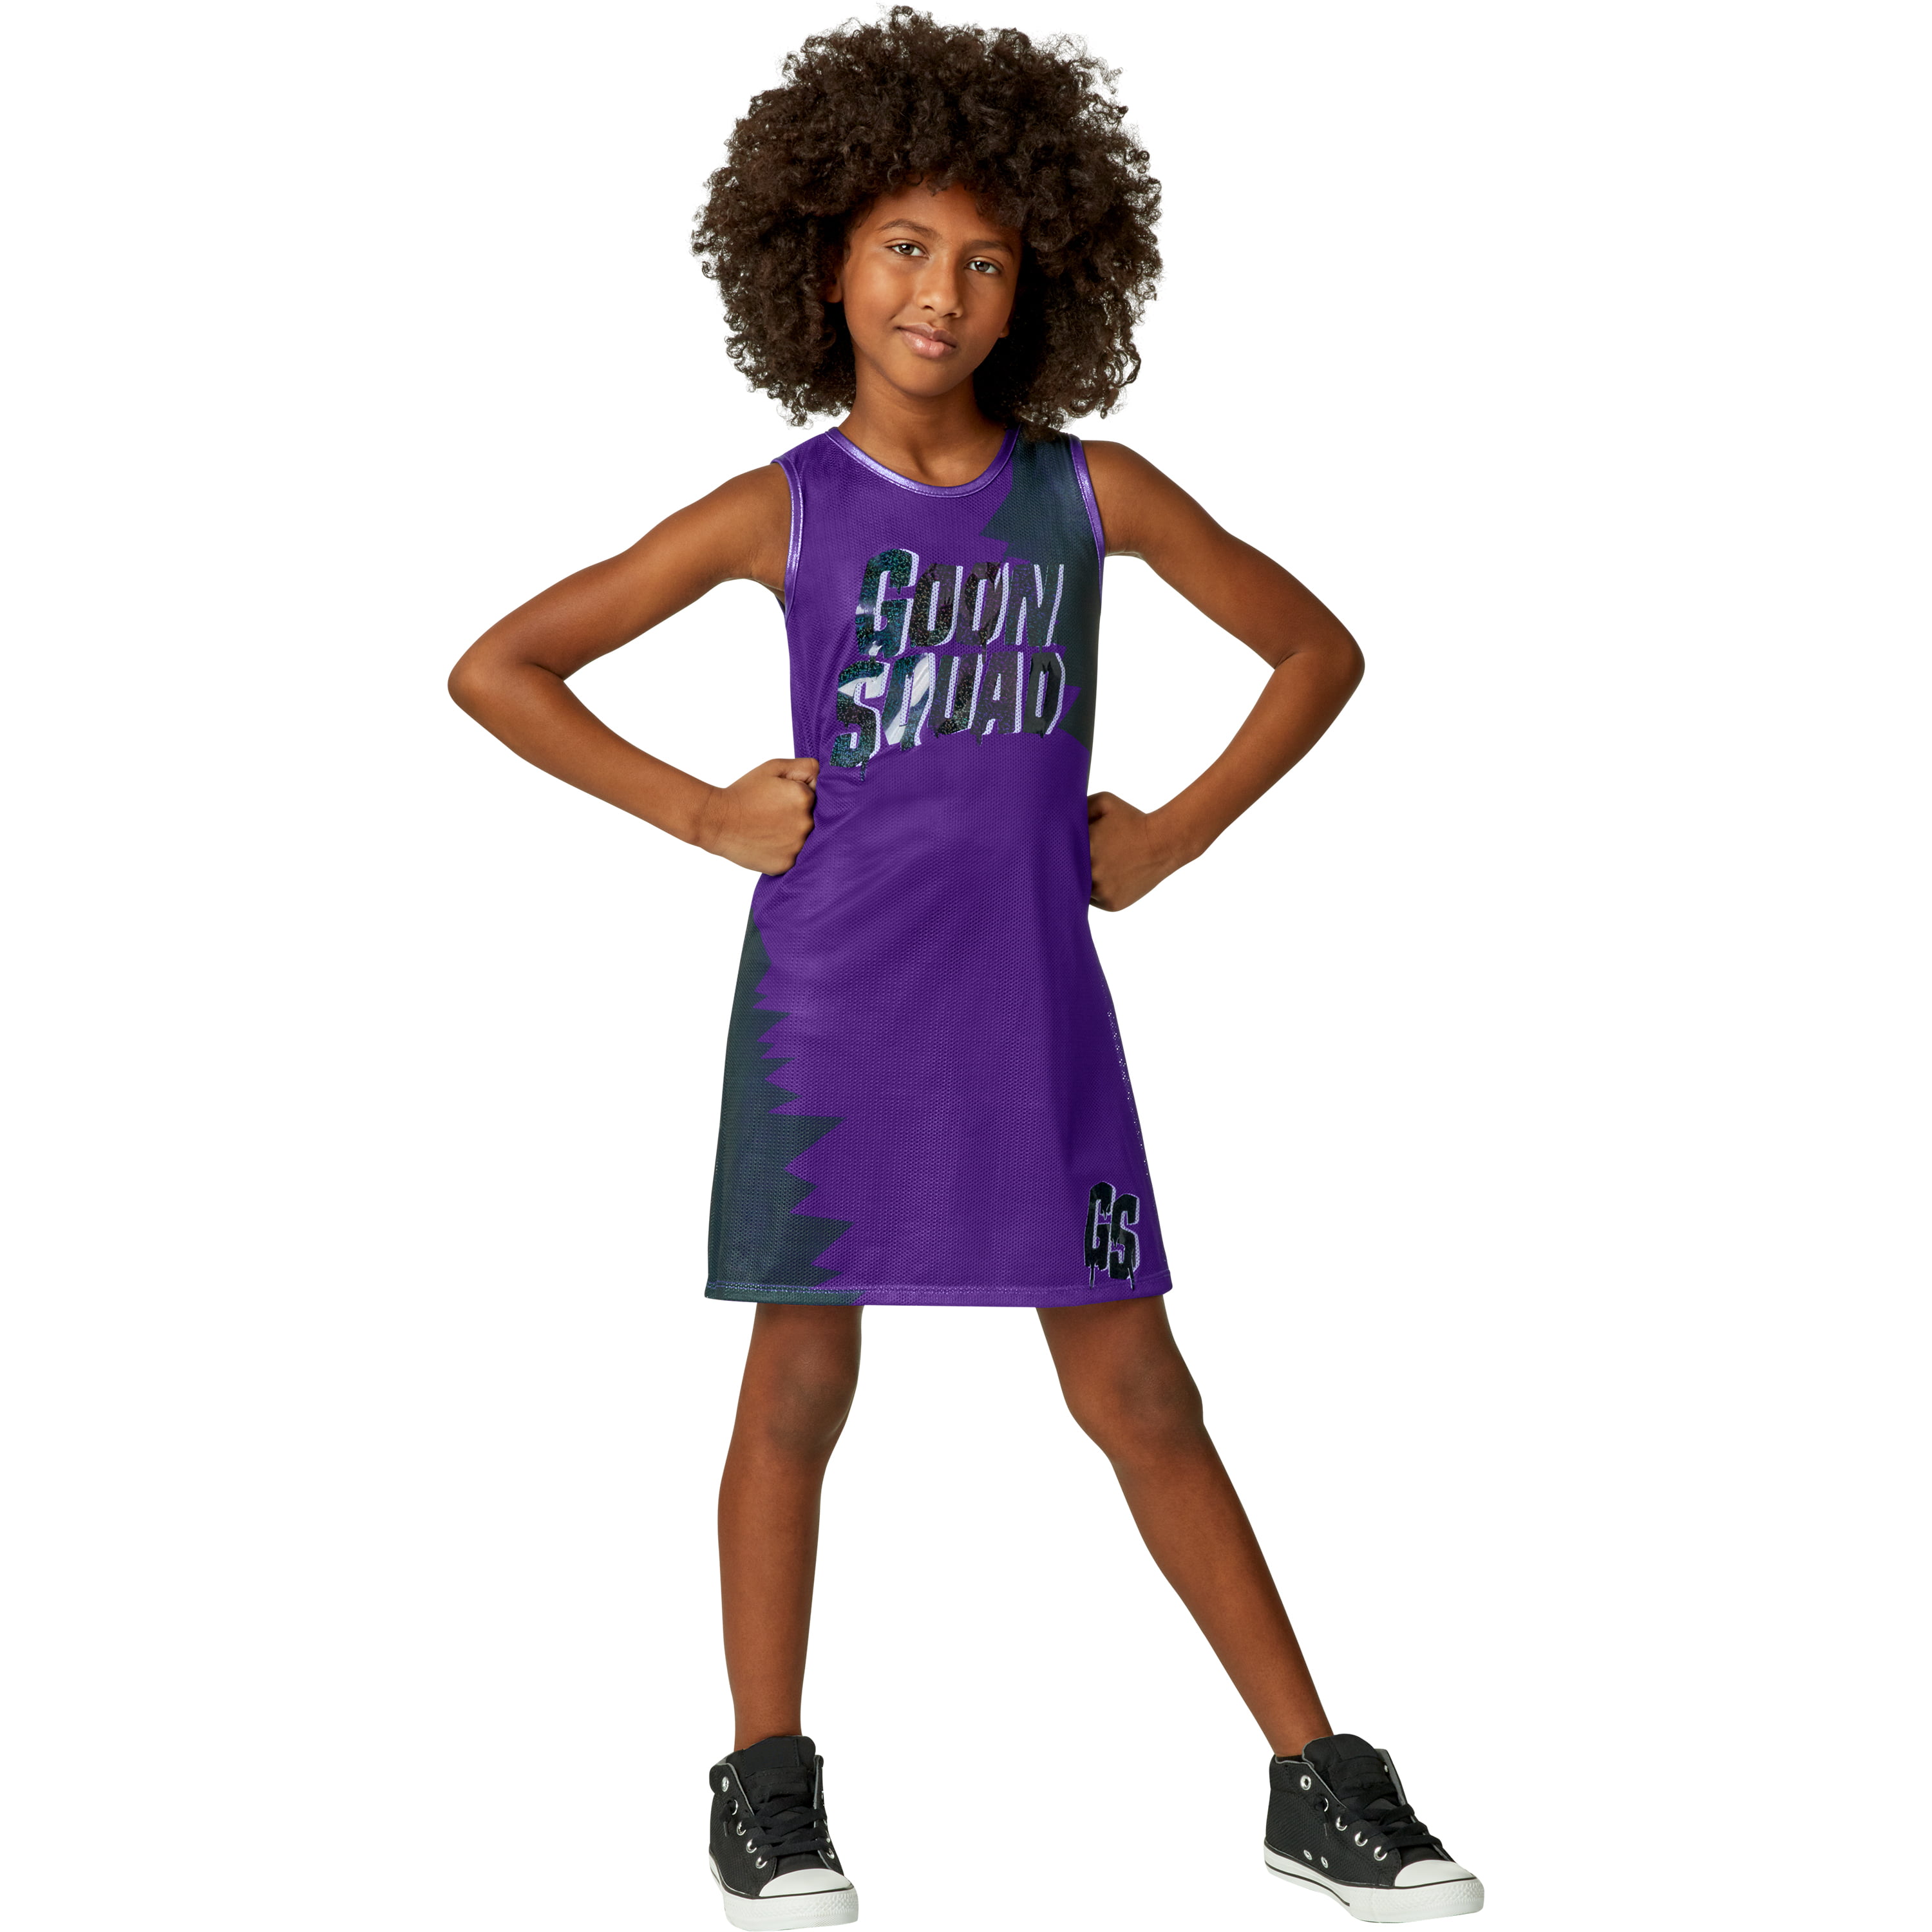 Rubies Space Jam Tune Squad Team Jersey Dress Child Halloween Costume, Size: Medium (8-10)